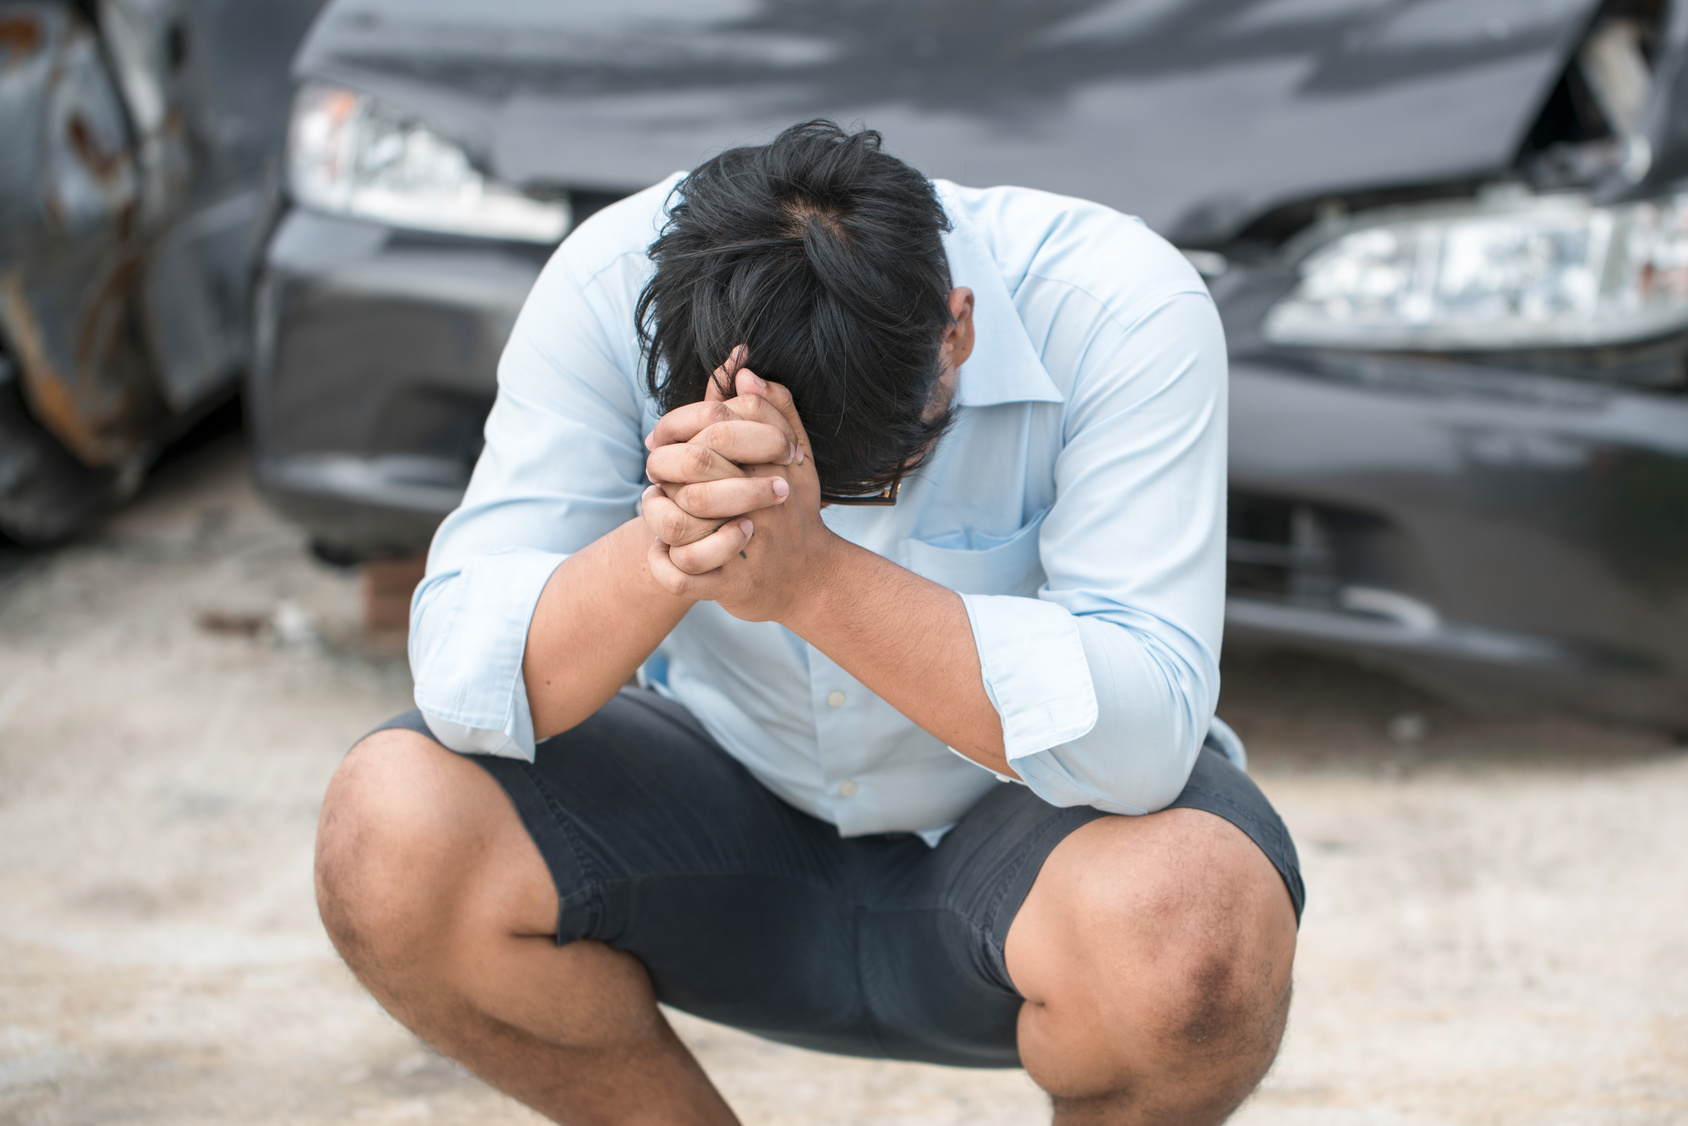 praying guy by crashed car-immediate.jpg